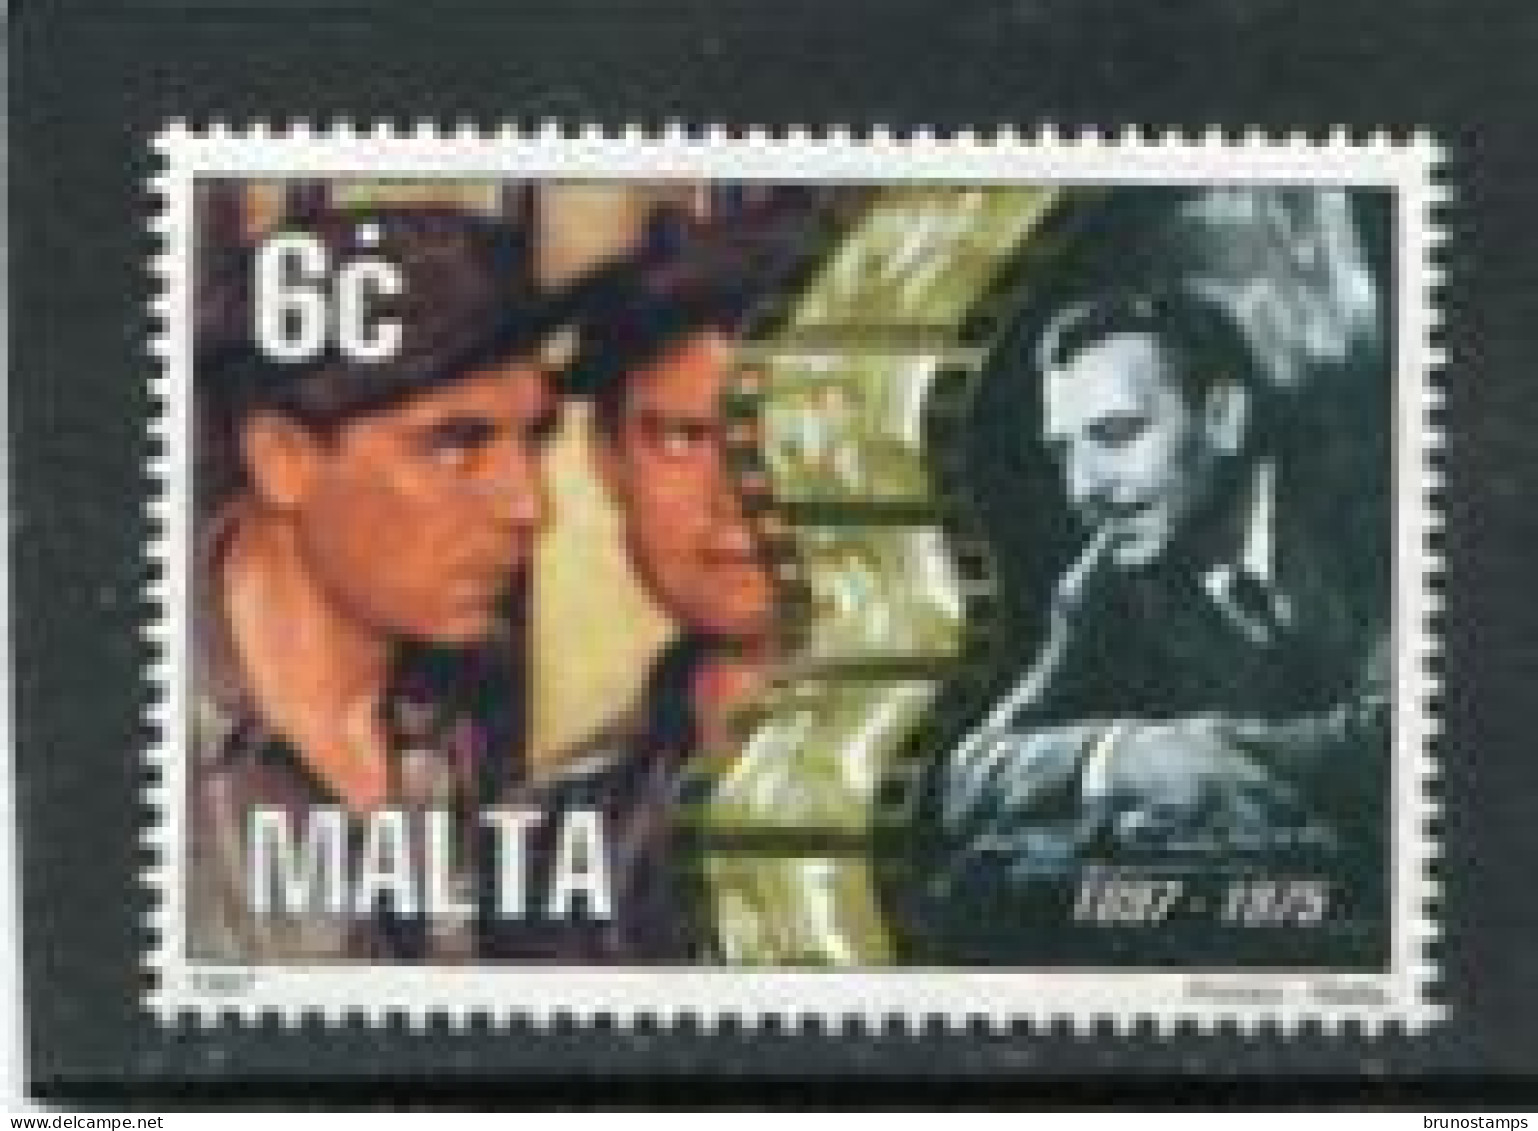 MALTA - 1997  6c  CALLEIA  MINT NH - Malta